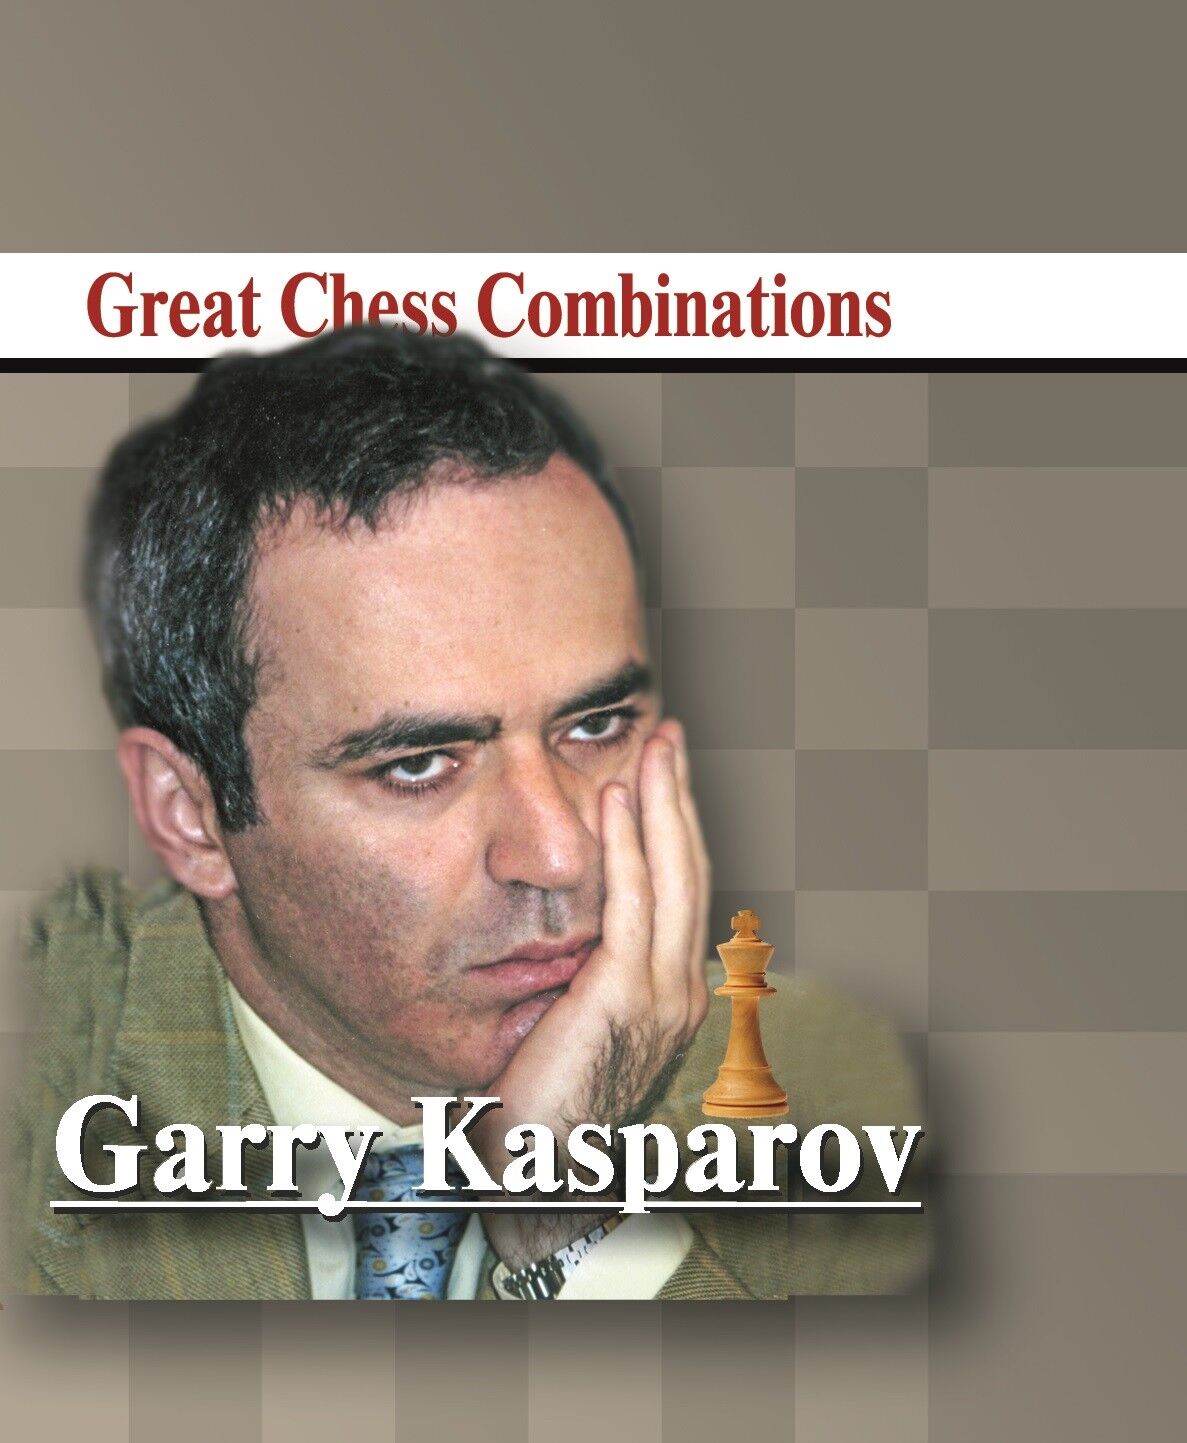 Happy 85th birthday to Boris Spassky, the 10th World Chess